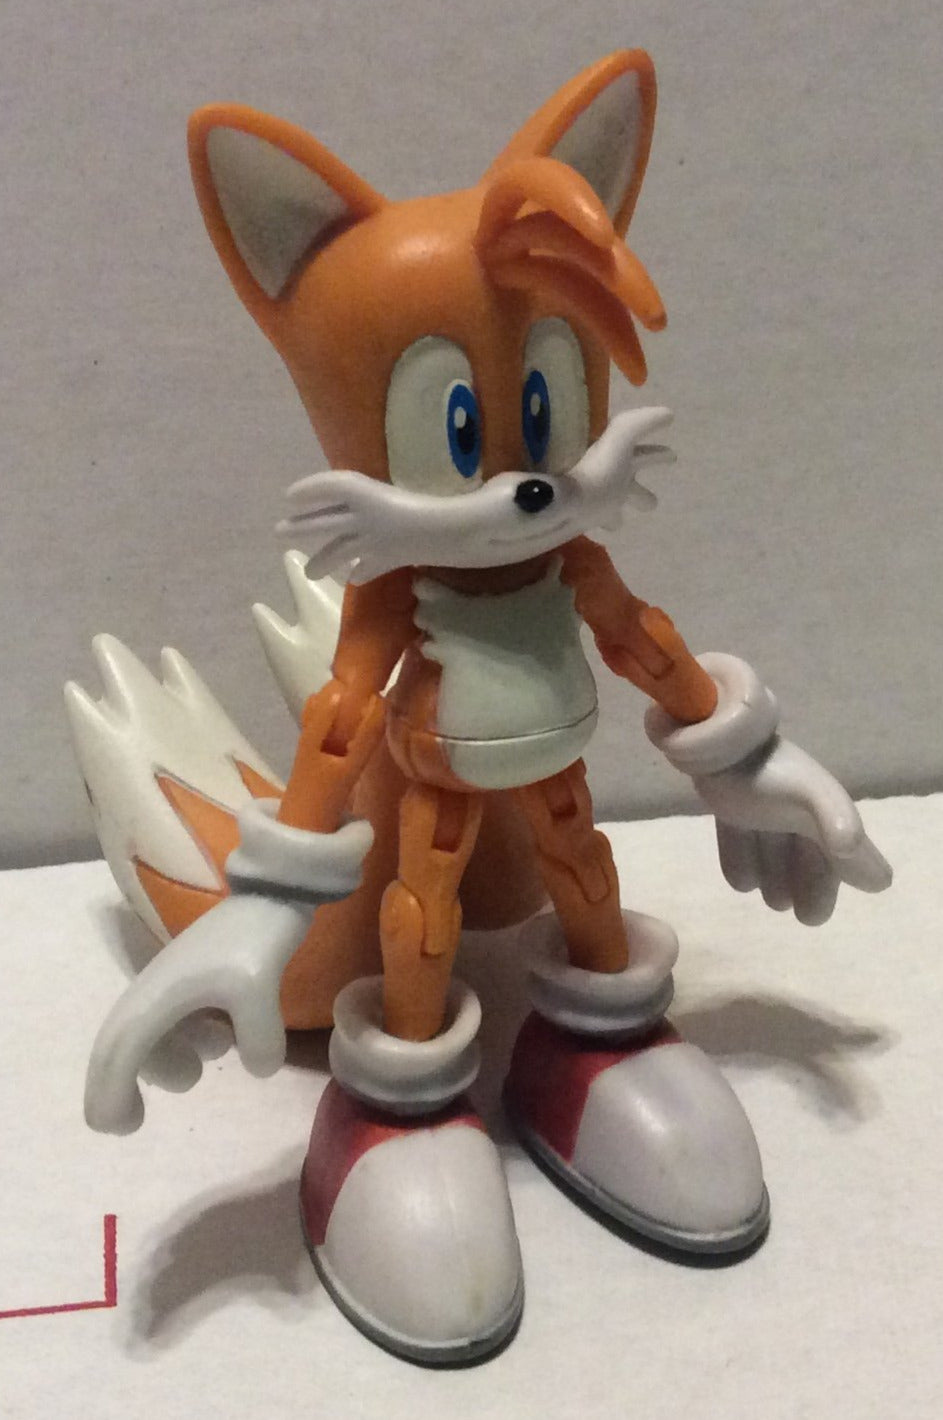 Figure Sonic The Hedgehog Boom Series Vol3 - Tails na Americanas Empresas